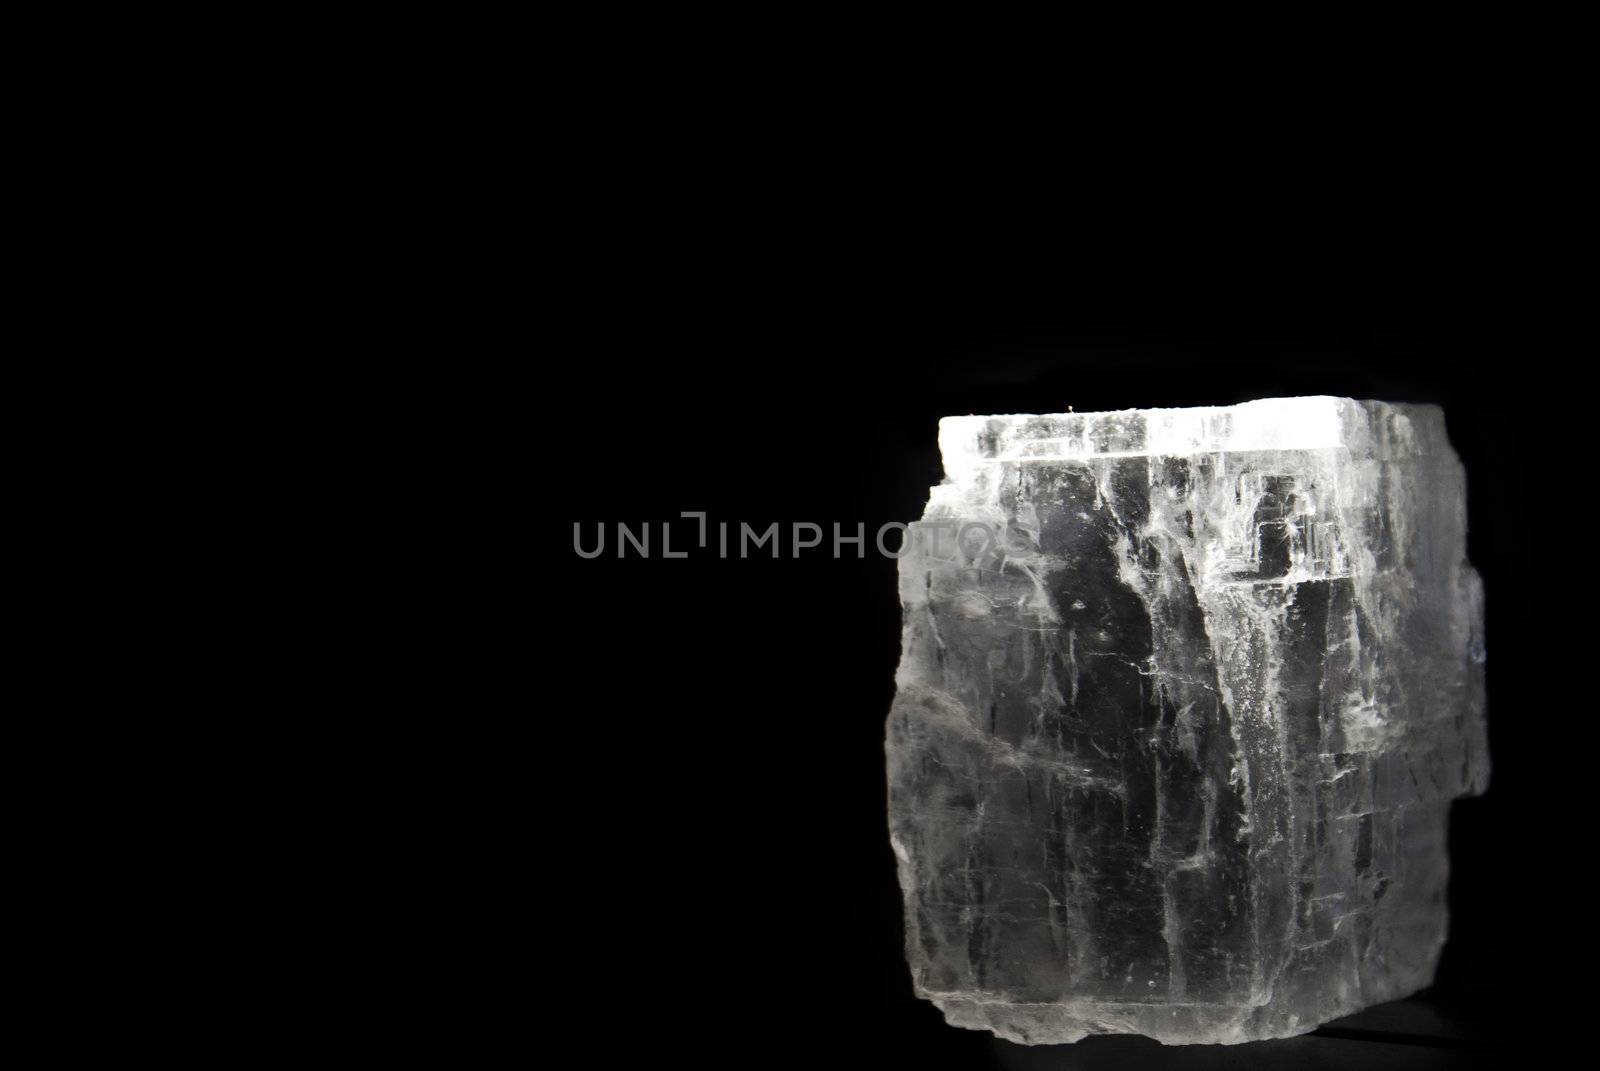 Crystal of rock salt on black by gandolfocannatella